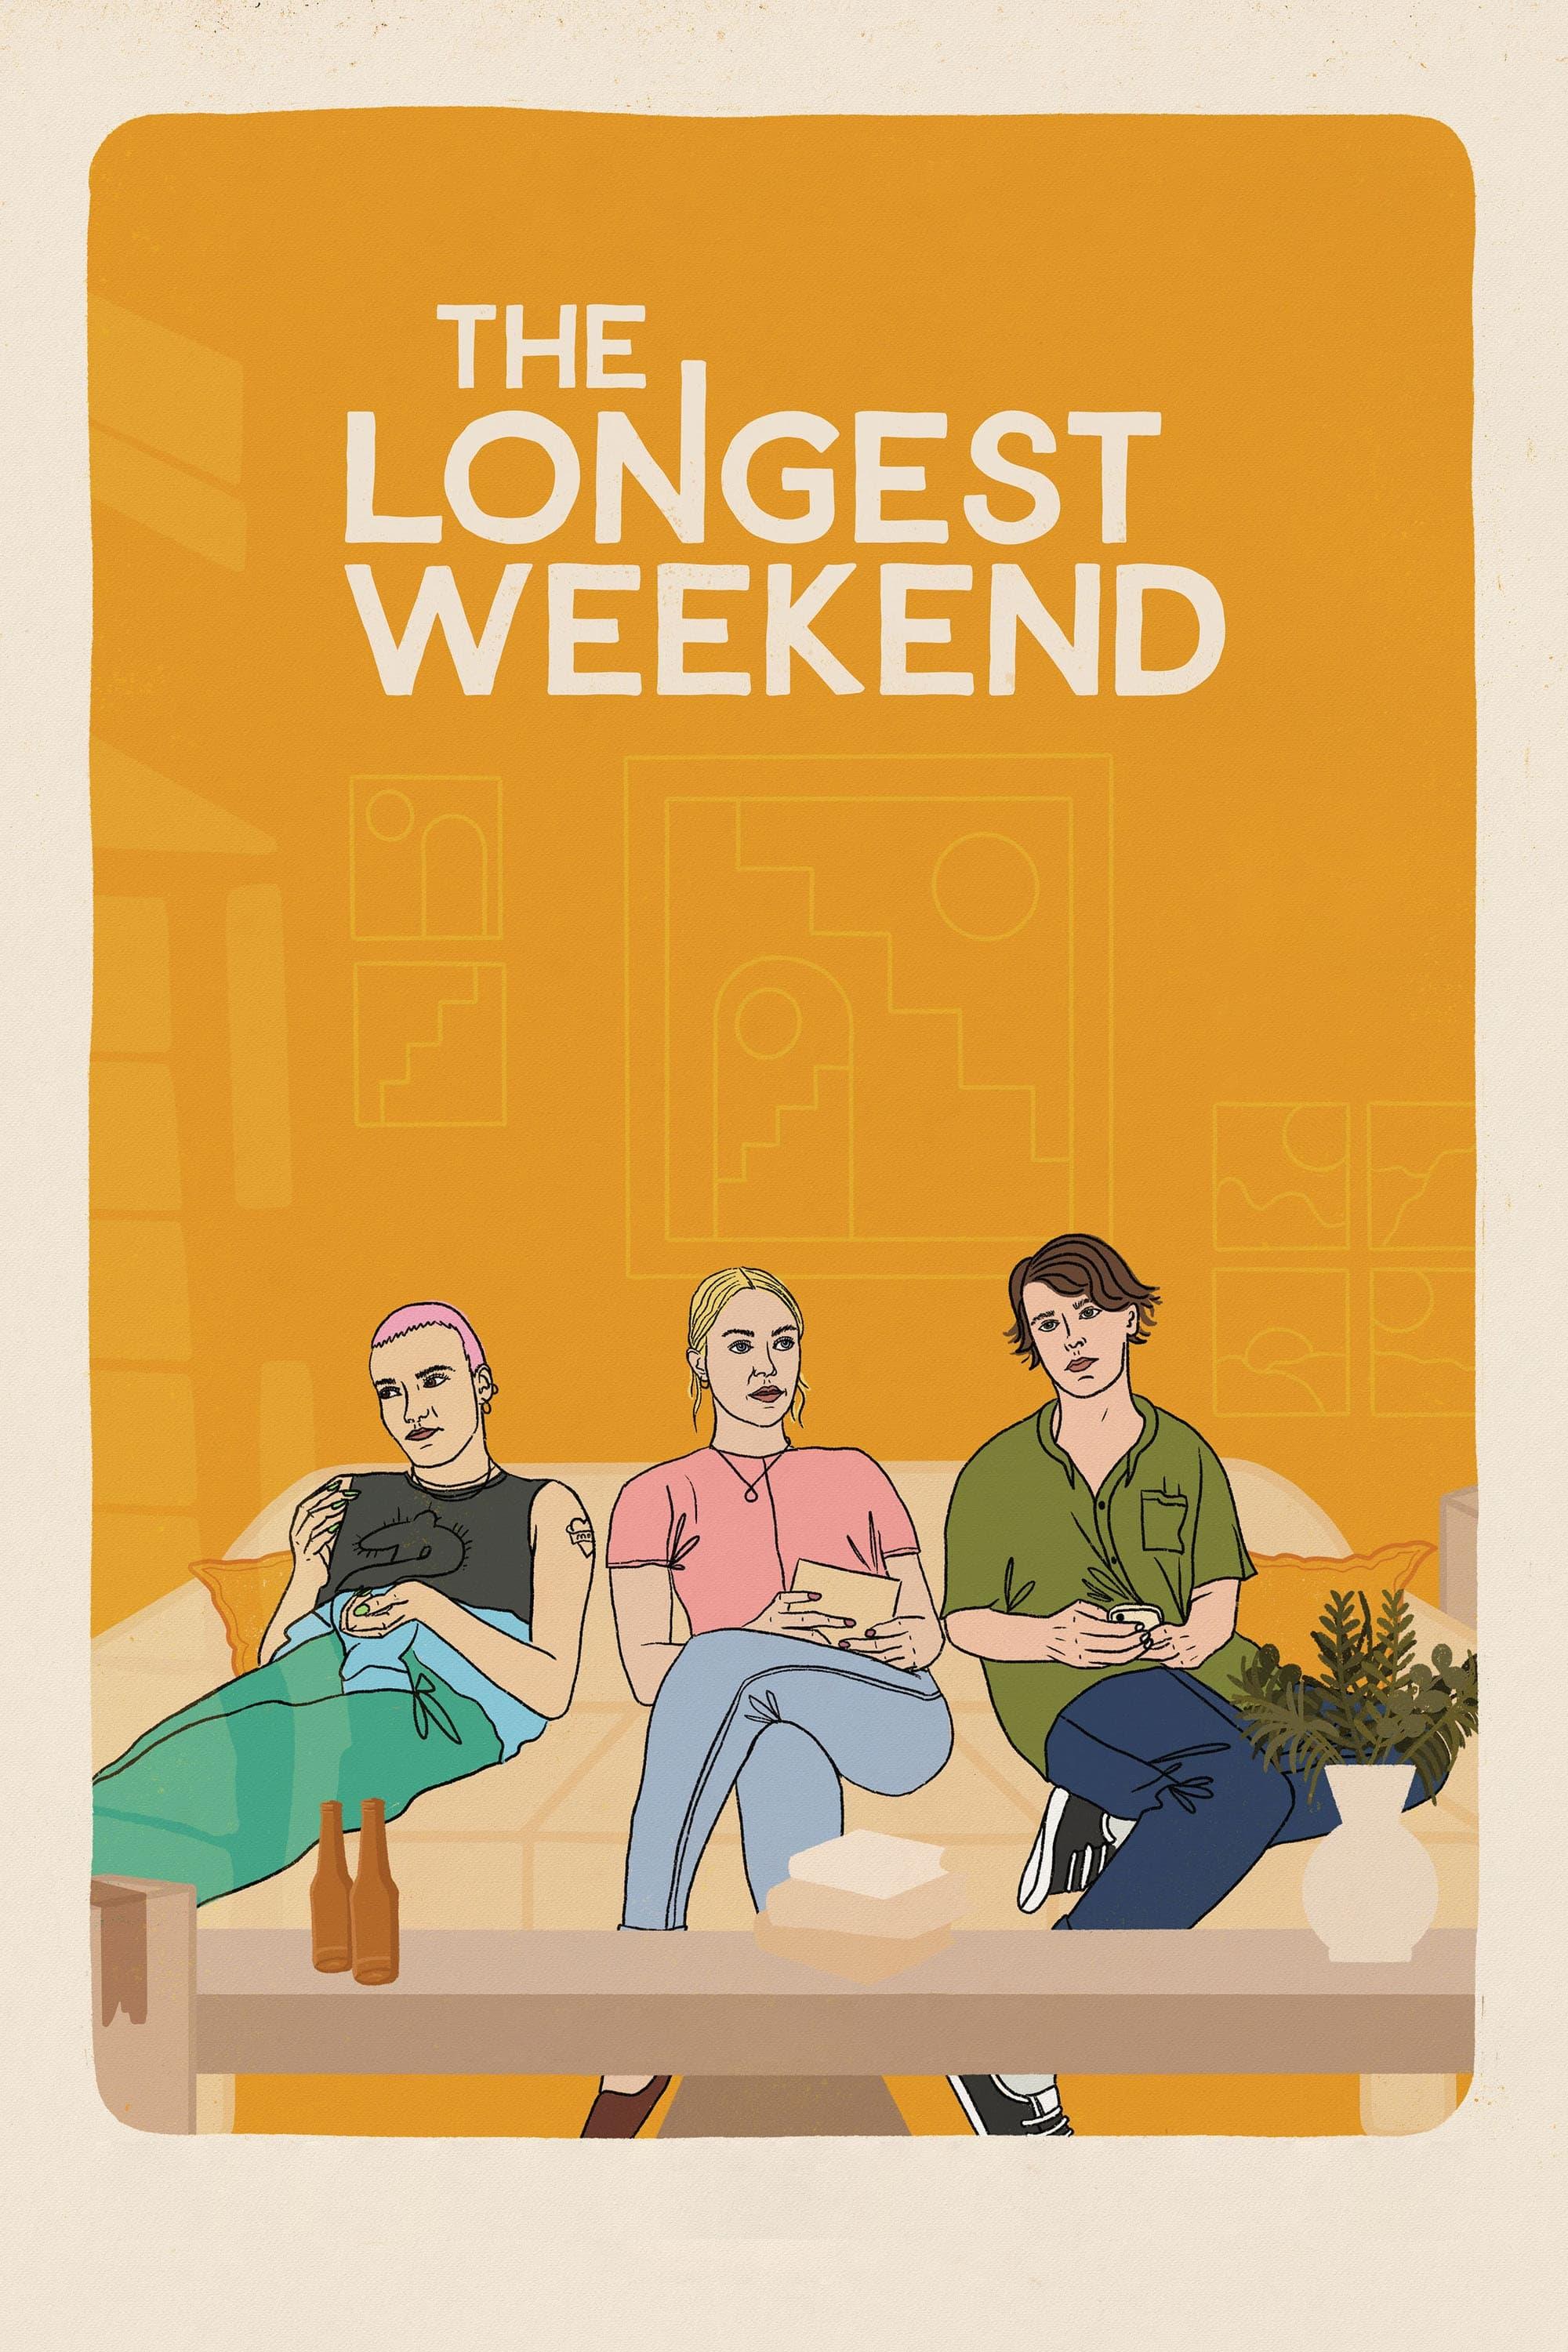 The Longest Weekend poster